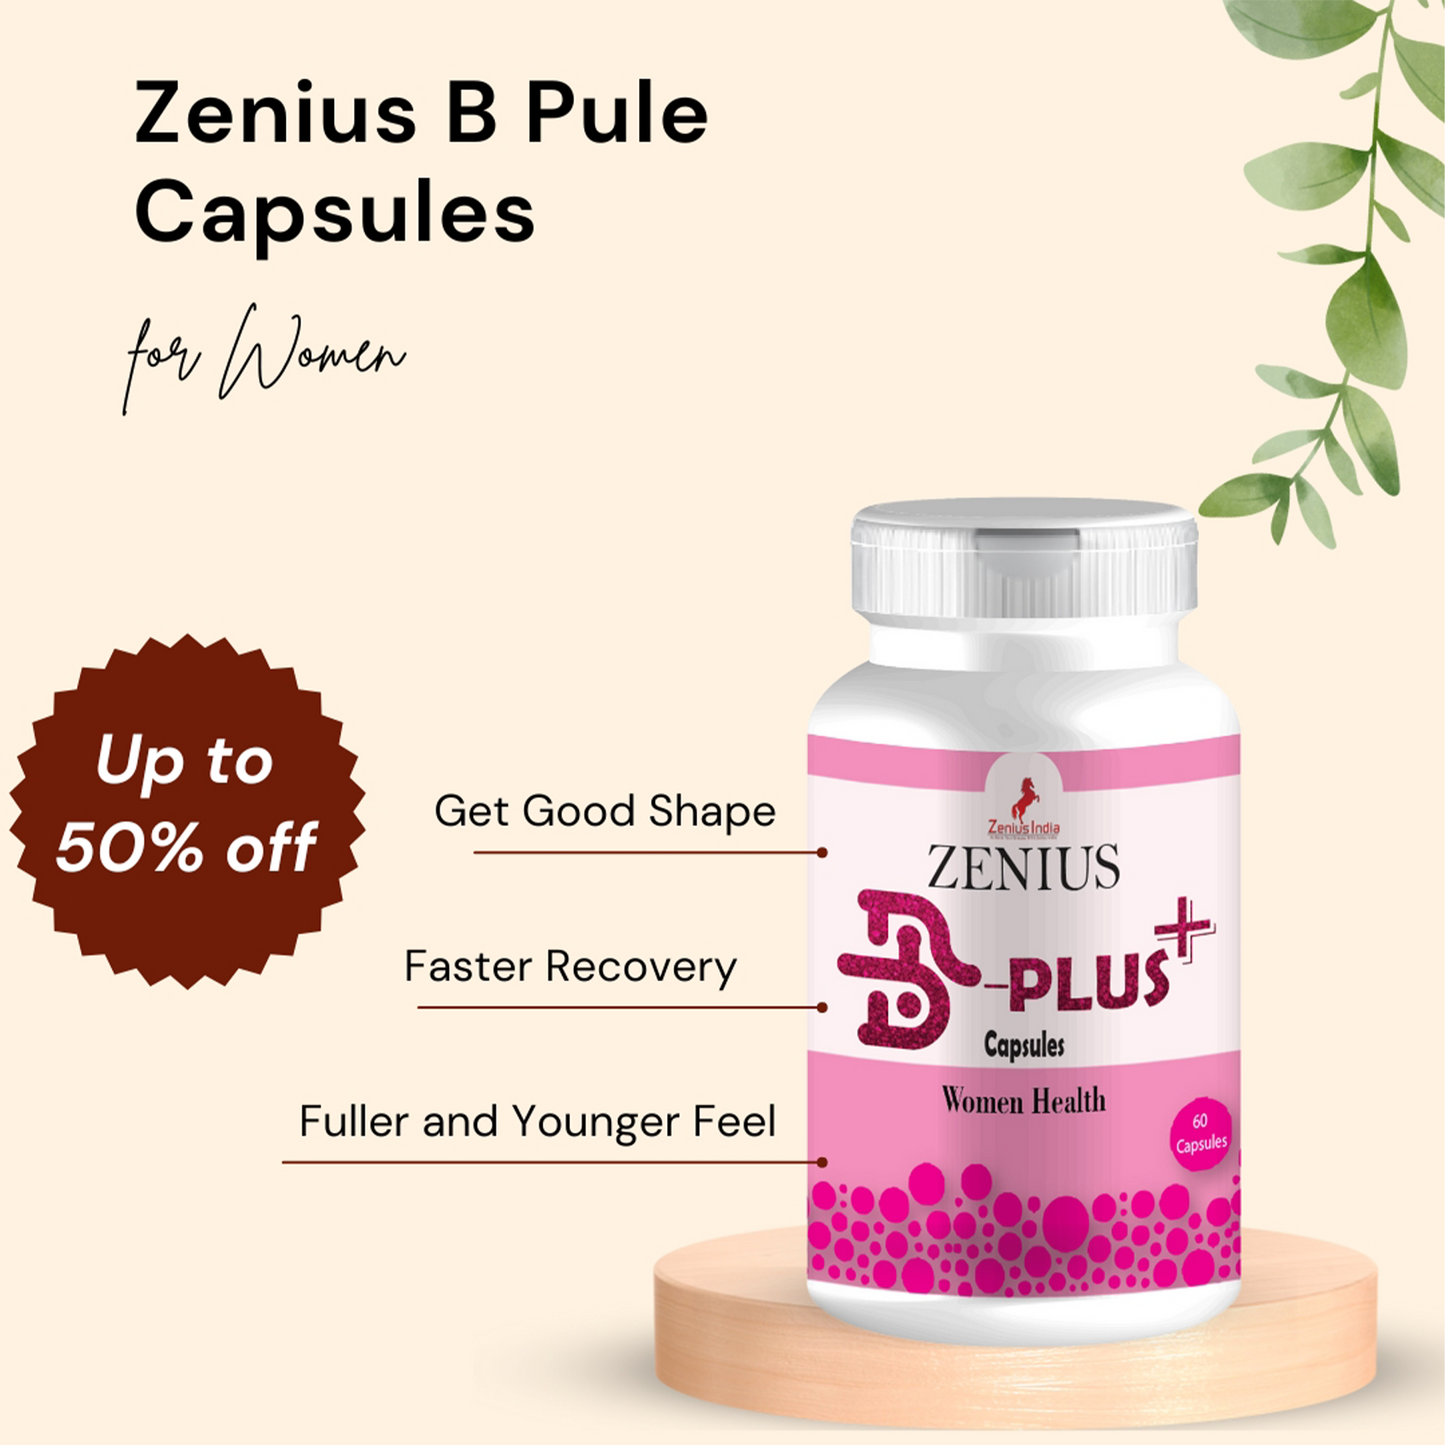 Buy Zenius B Cute Capsule, breast reduction capsule